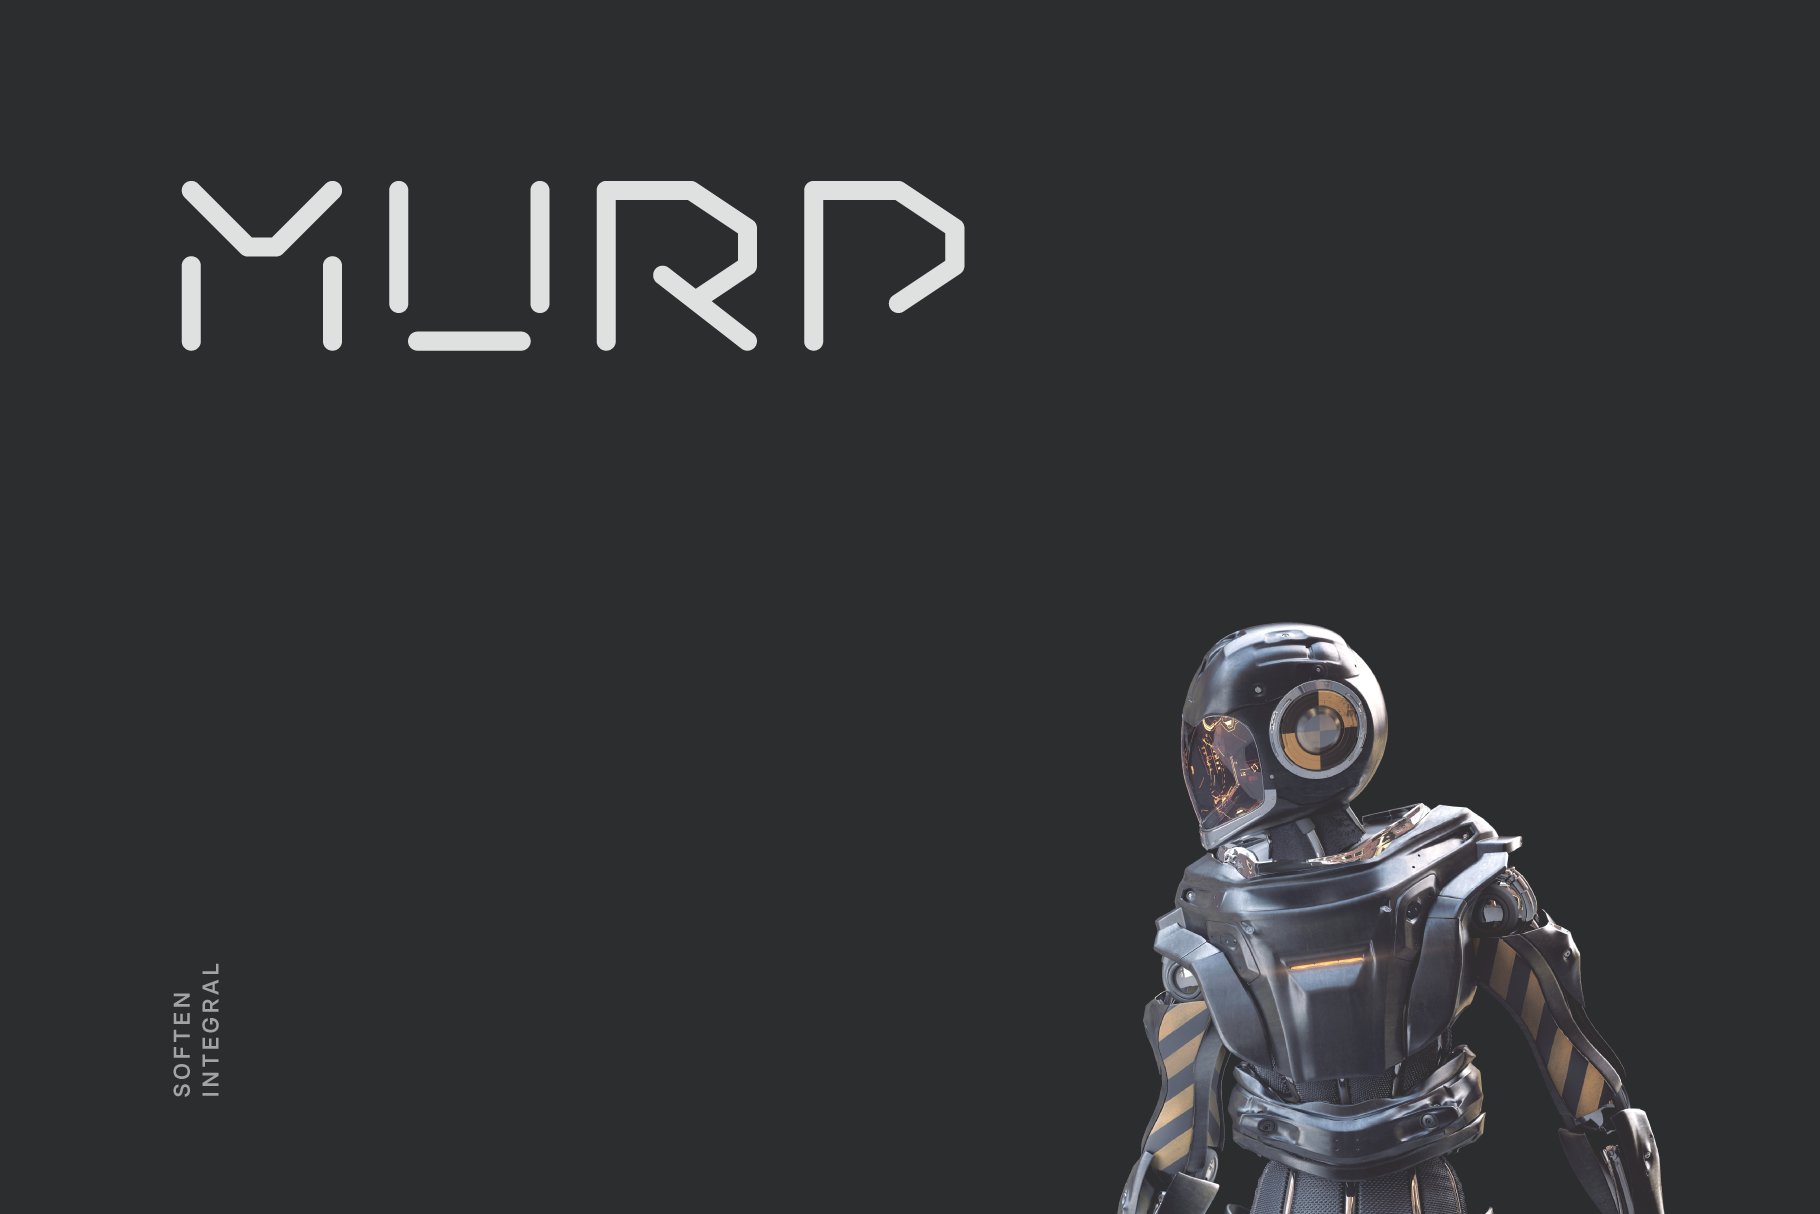 Murp Futuristic Cyber Font cover image.